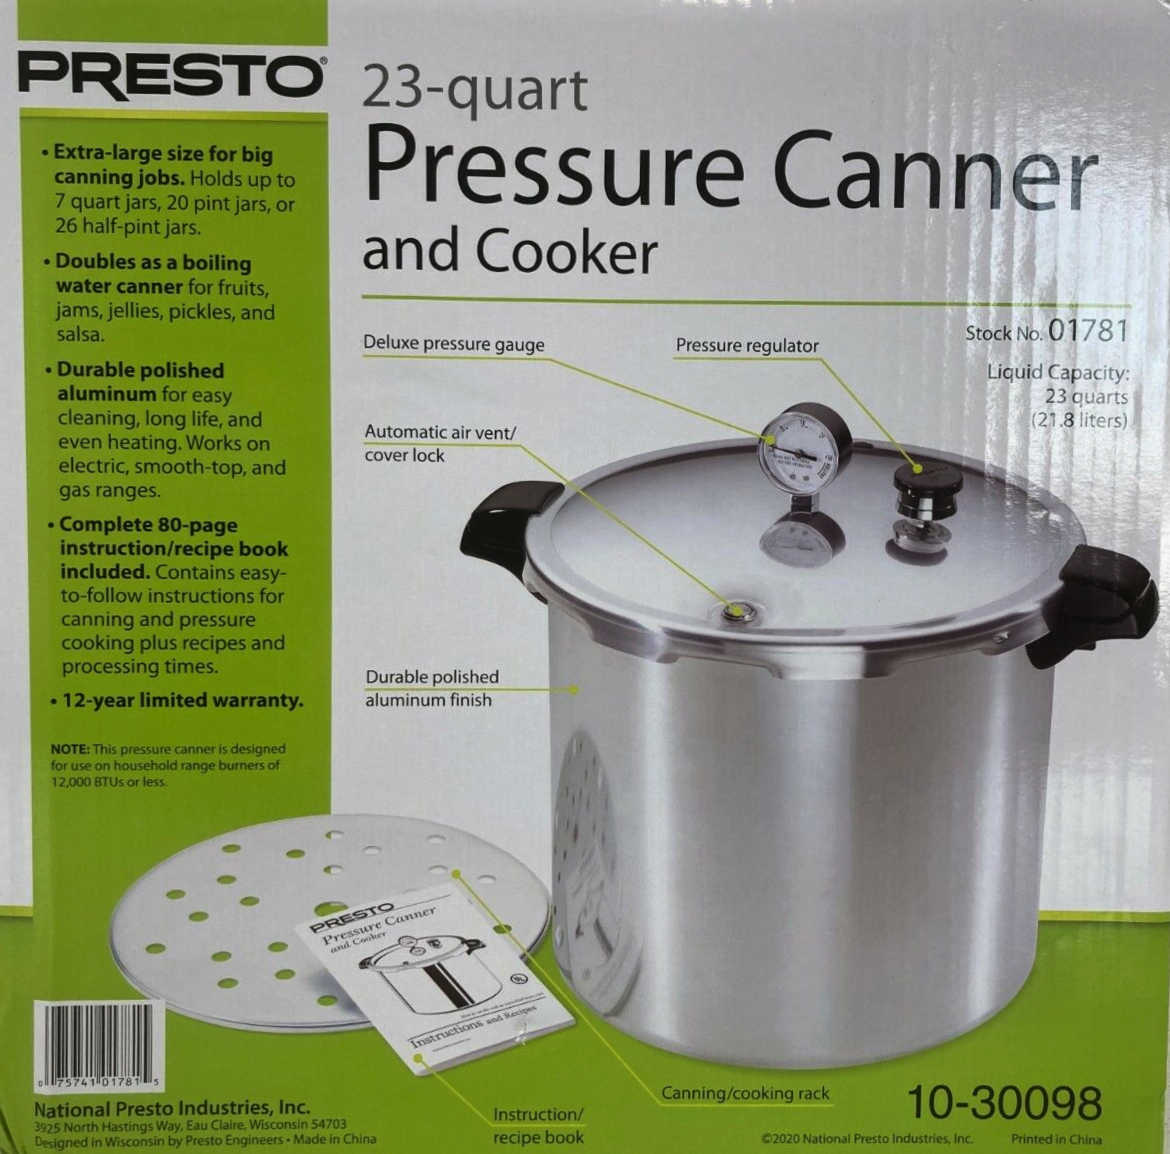 https://www.midwestgrowkits.com/resize/Shared/Images/Product/Presto-23-Quart-Pressure-Cooker-Sterilizer-Model-01781/Presto_23Q_box_web.jpg?bw=600&w=600